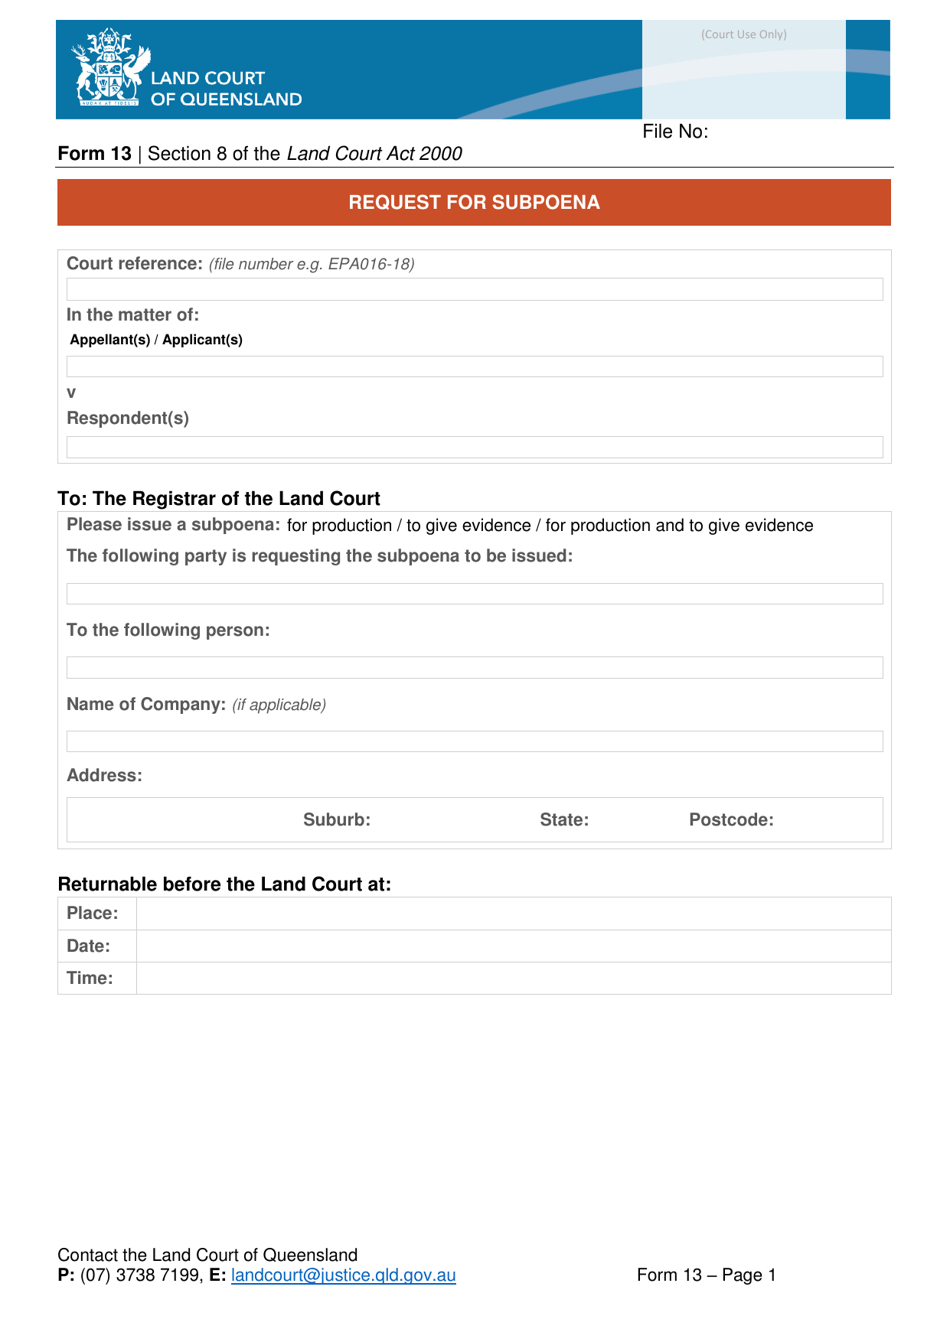 Form 13 Request for Subpoena - Queensland, Australia, Page 1